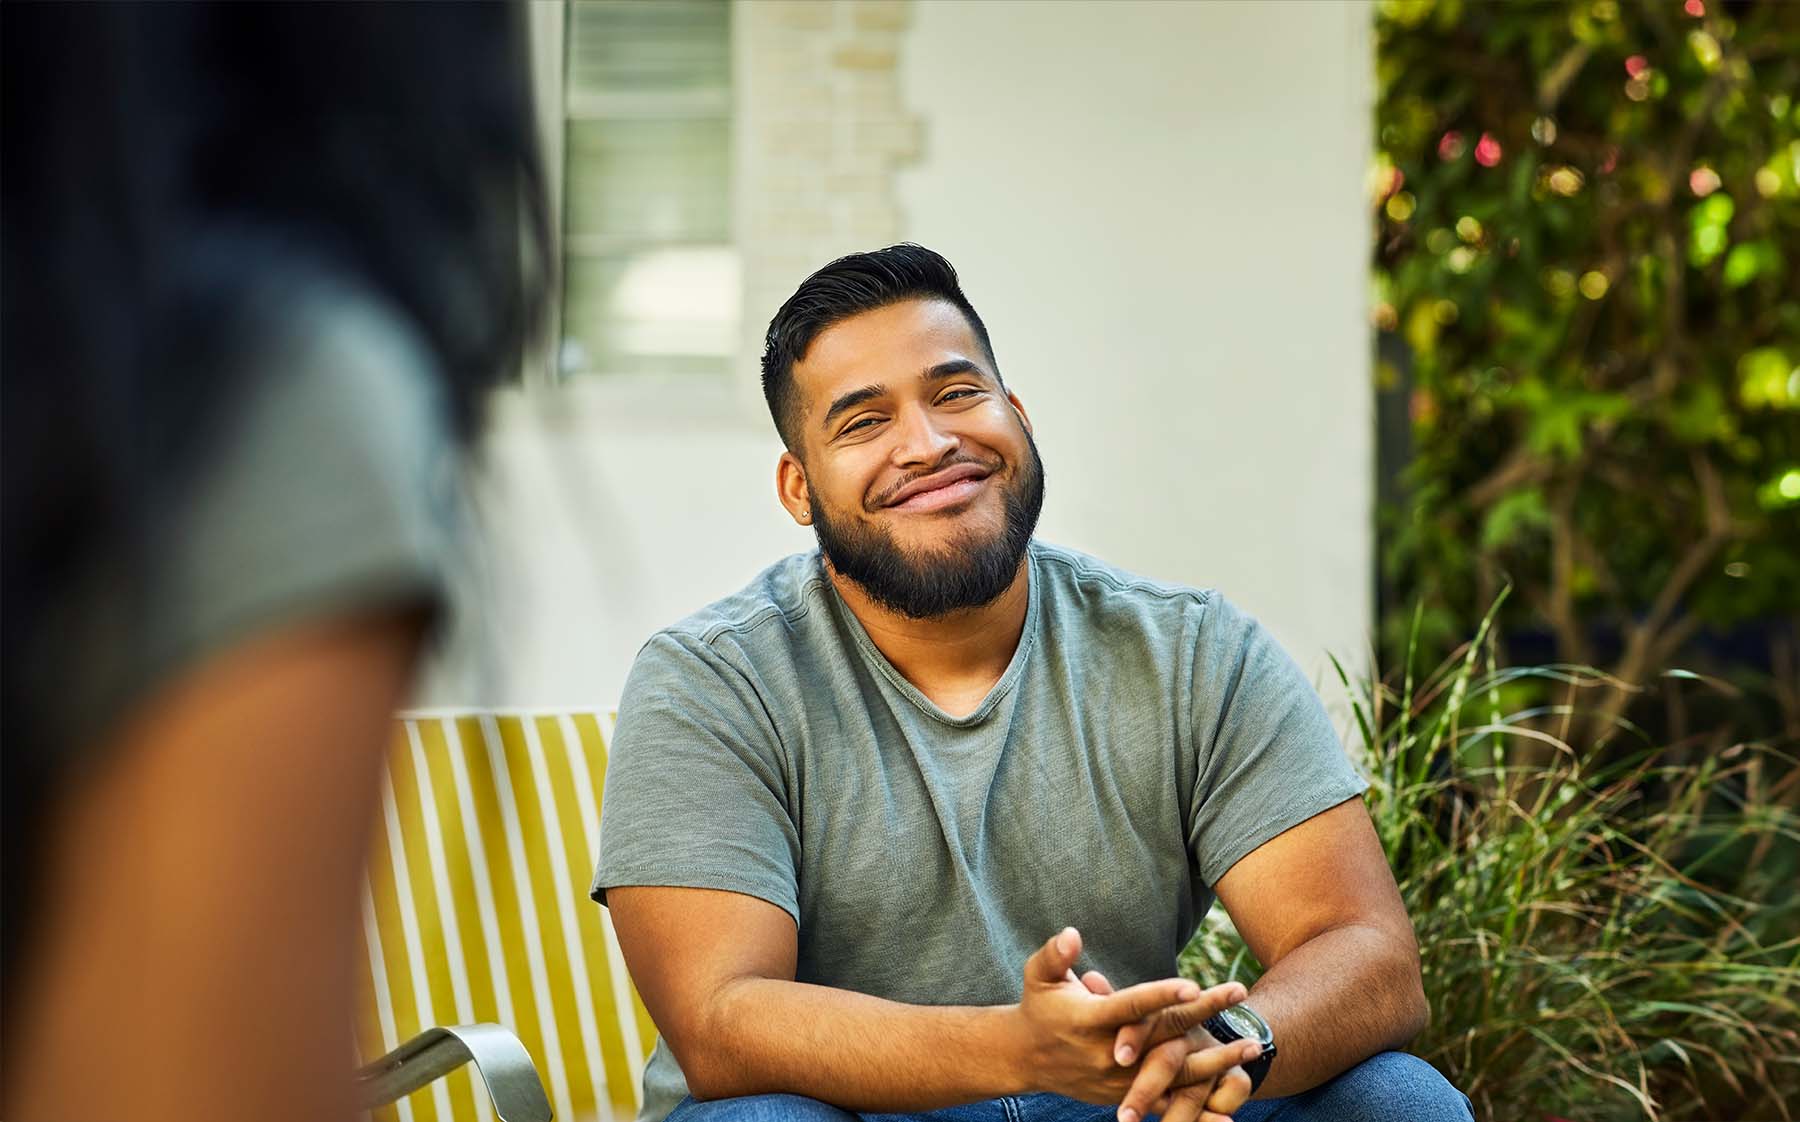 Young Hispanic man sitting outside smiles sheepishly as he quits vaping.